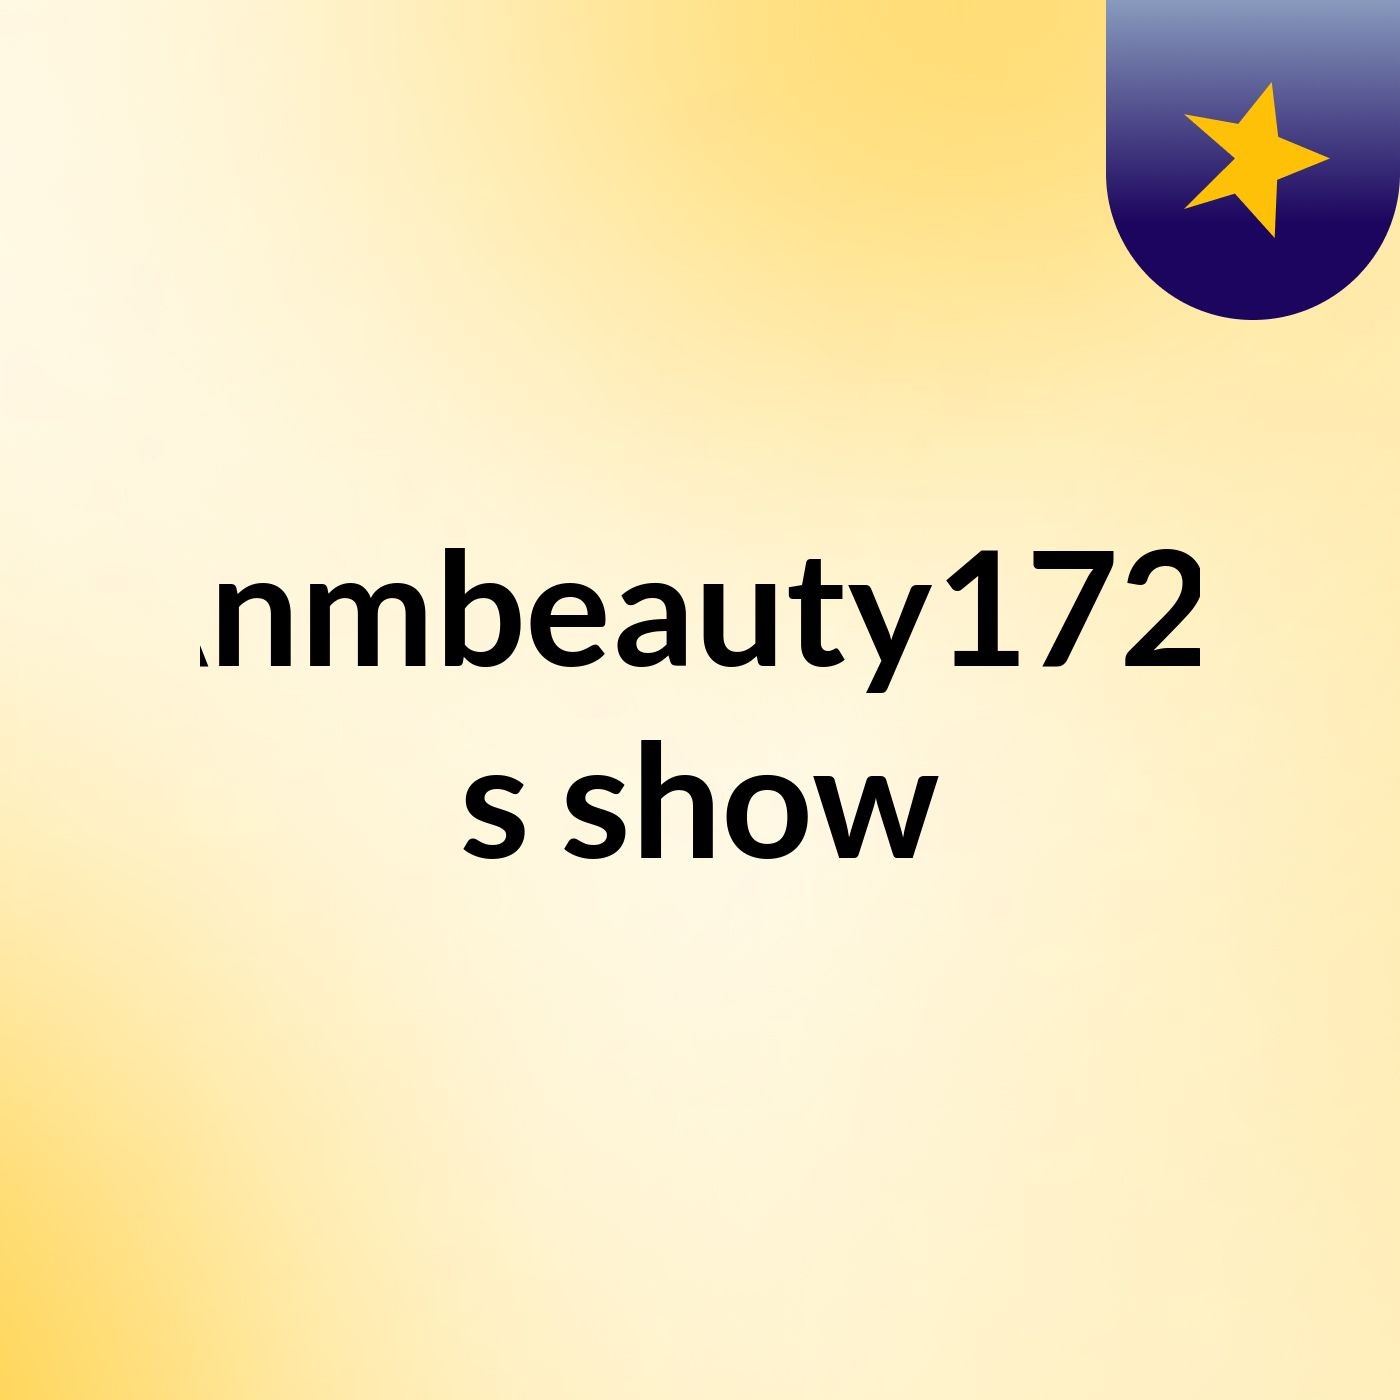 Anmbeauty1720's show